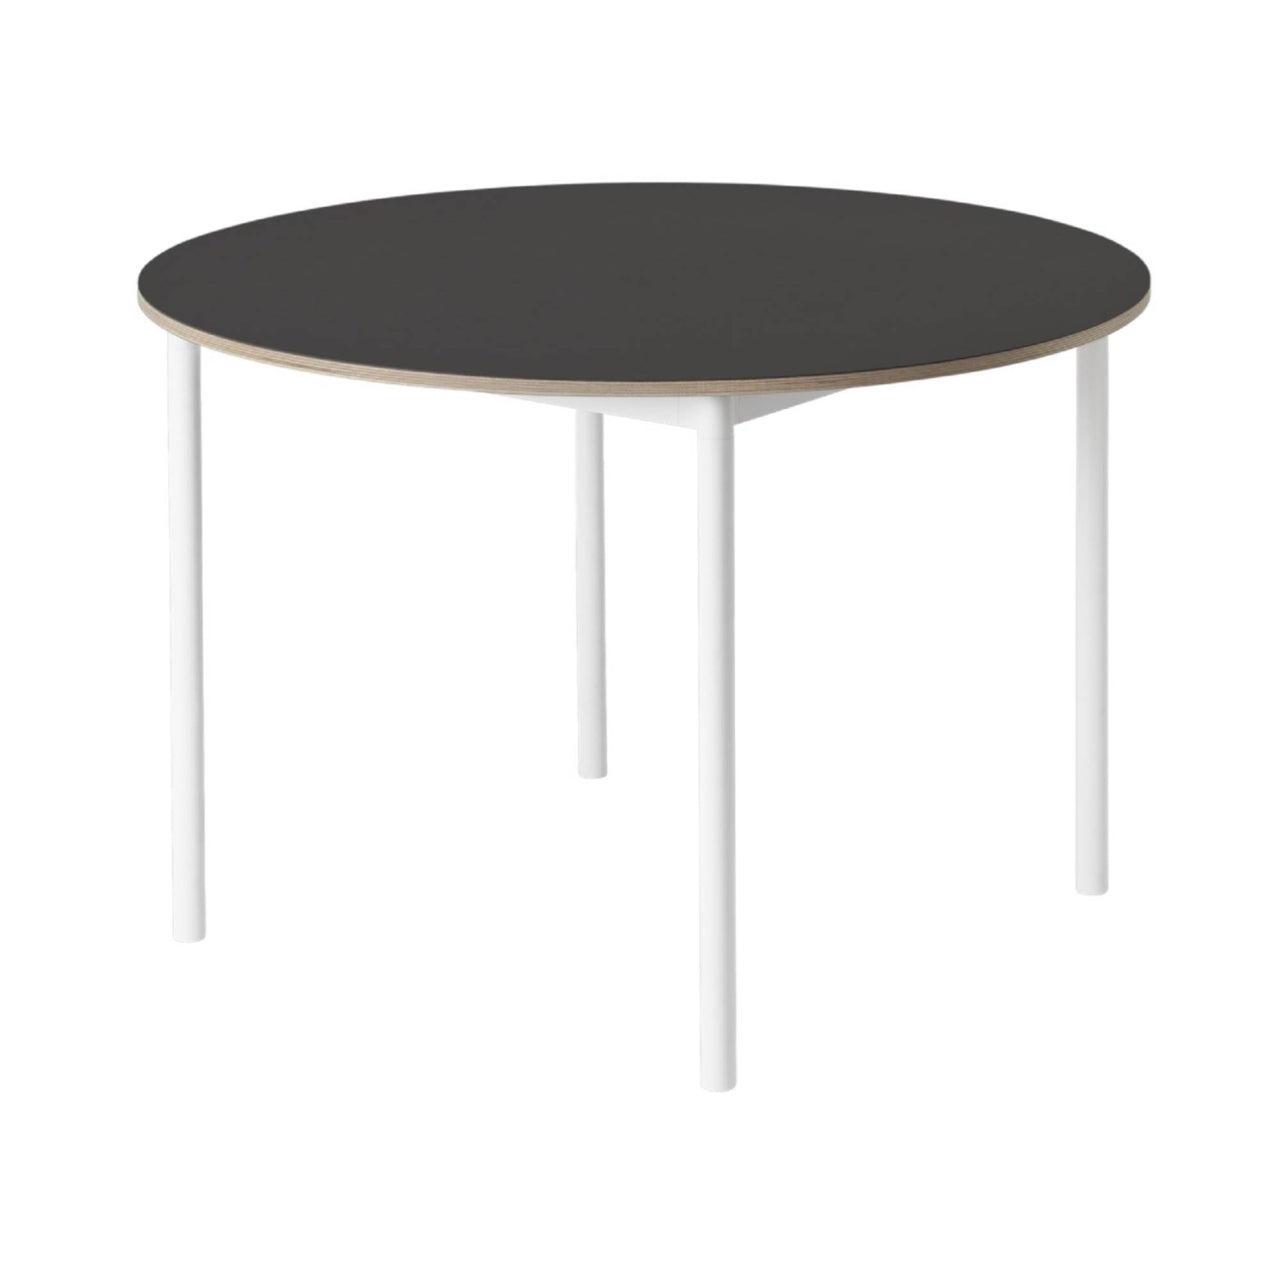 Base Table: Round + Black Linoleum + Plywood Edge + White